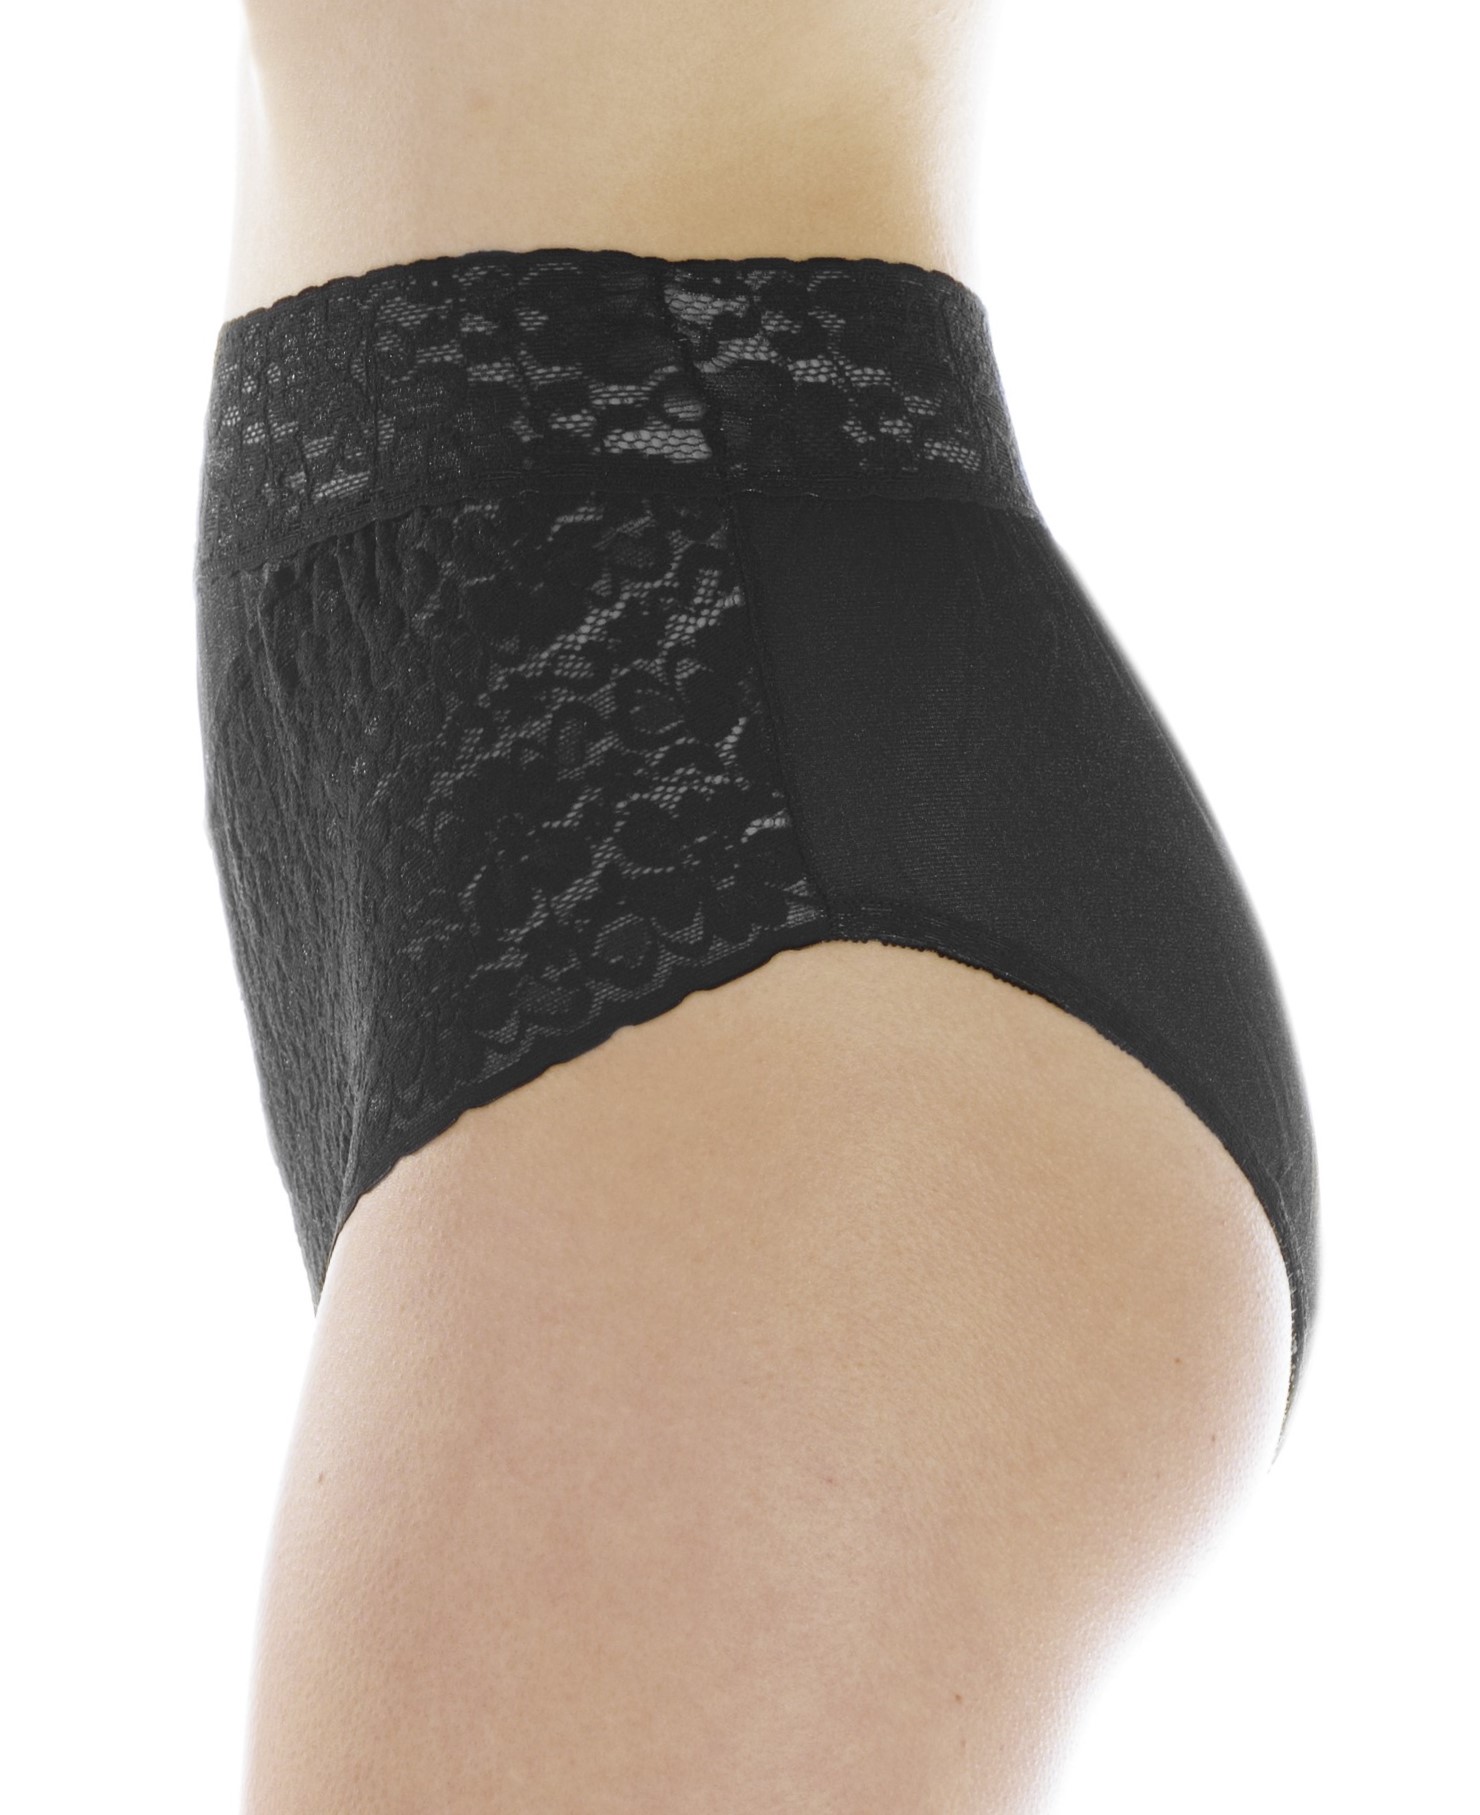 LeafMeiry #710 Hot Sale Ladies Underwear Women Fancy Lace Panties